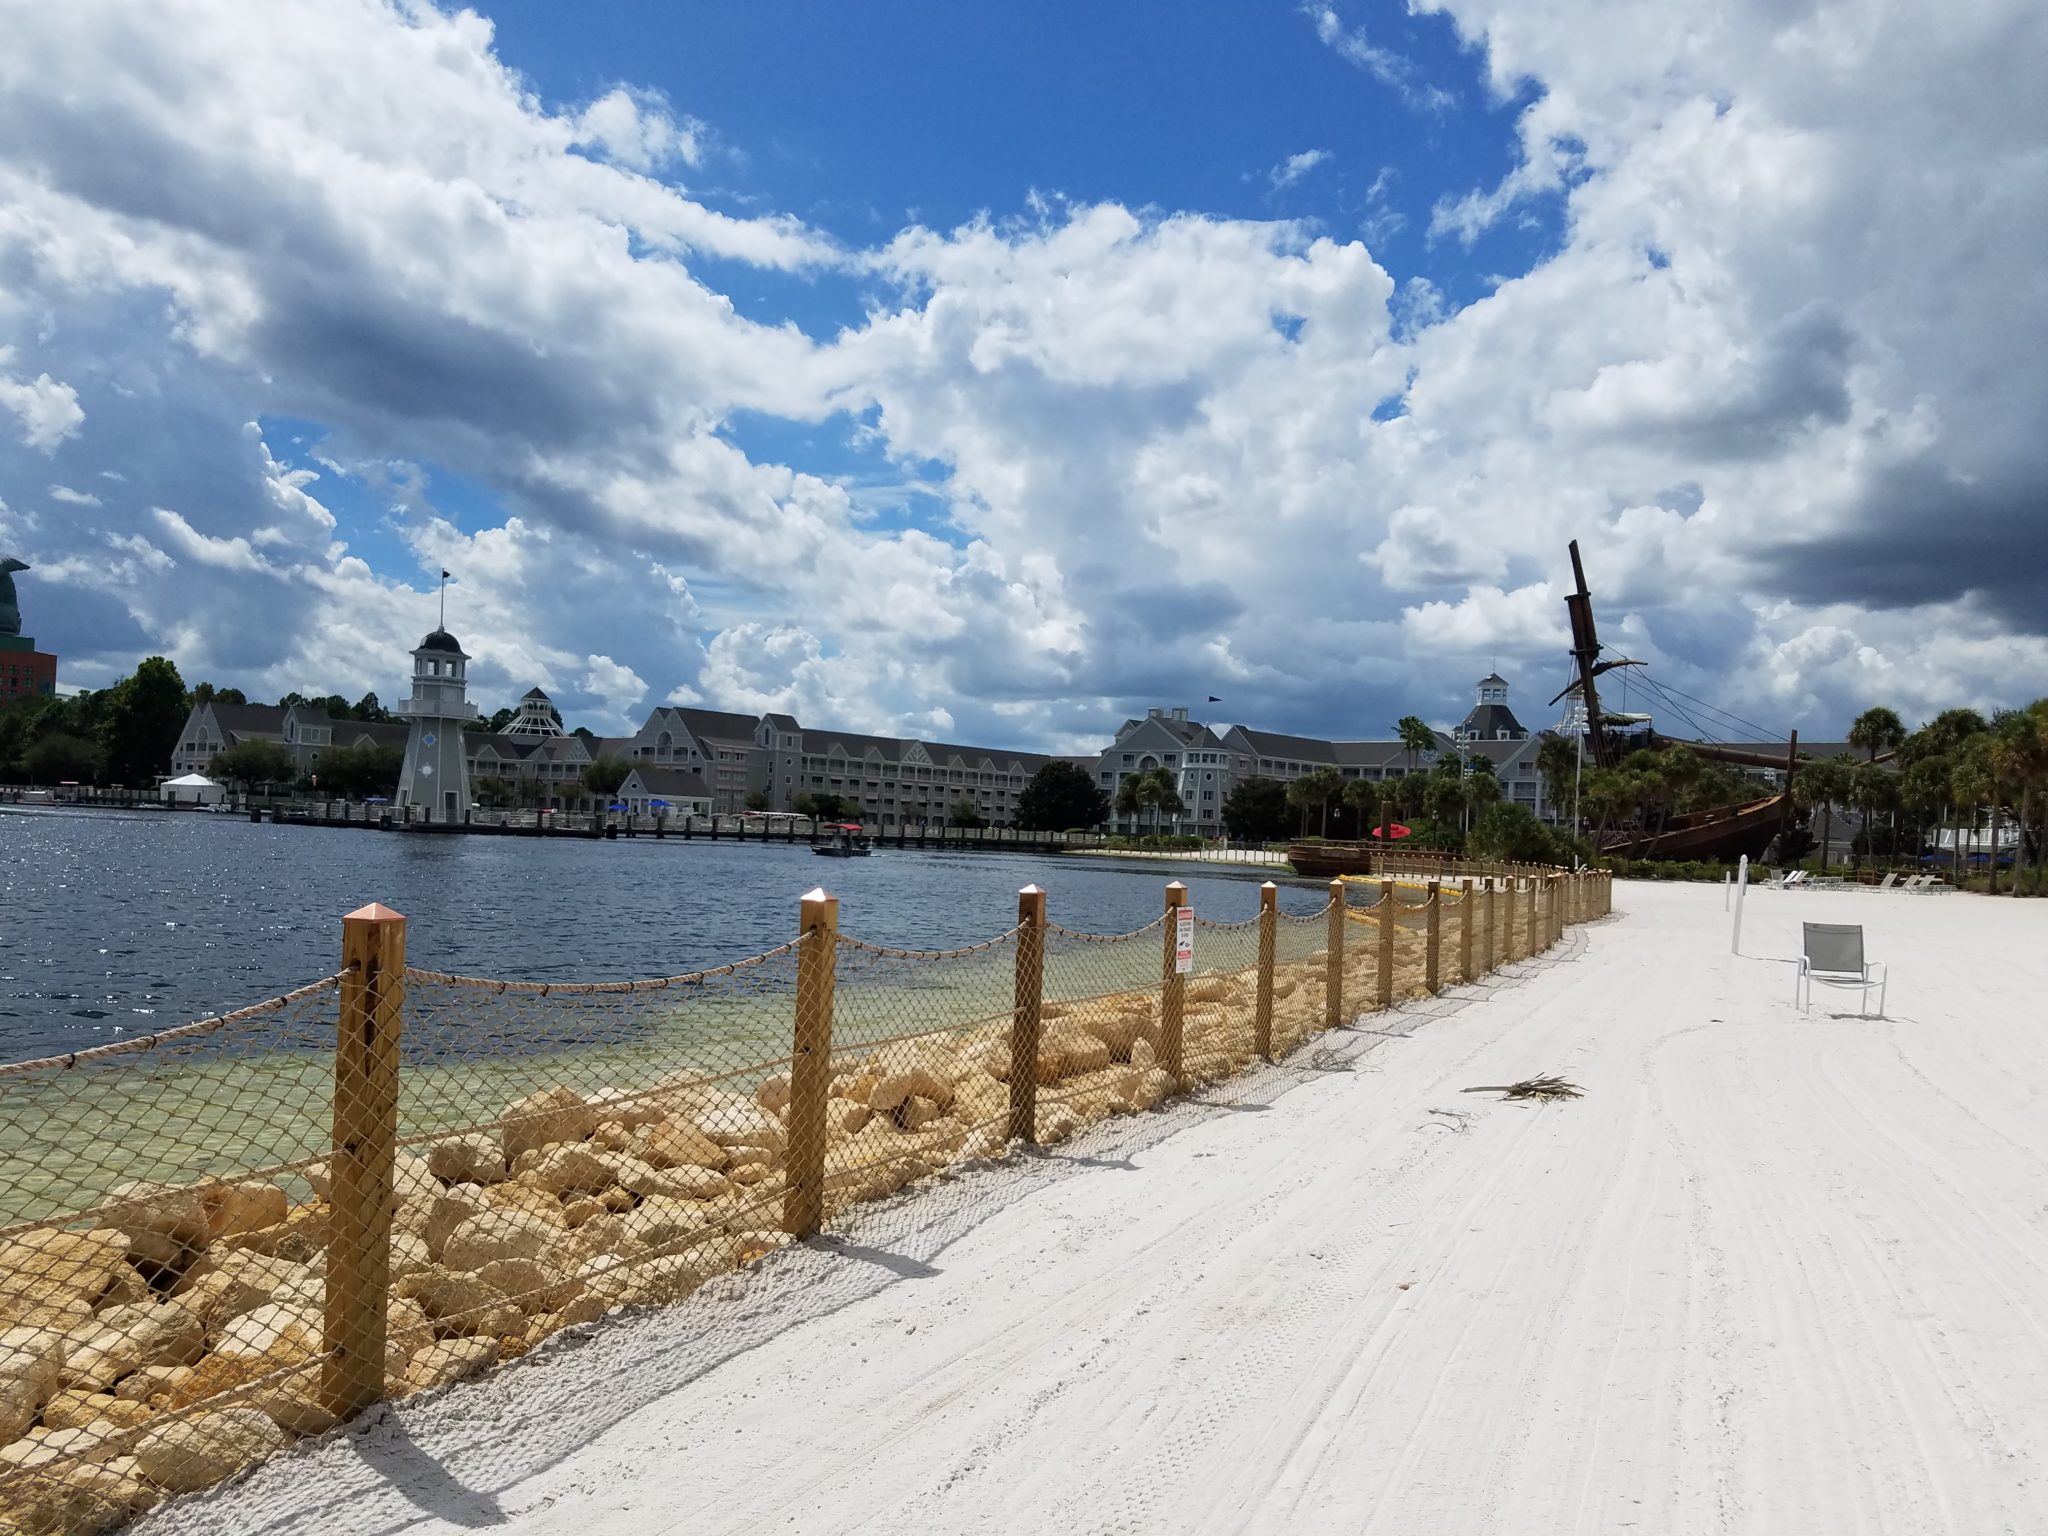 Disney’s Yacht & Beach Club Resort Shoreline Gets a New Rocky Look